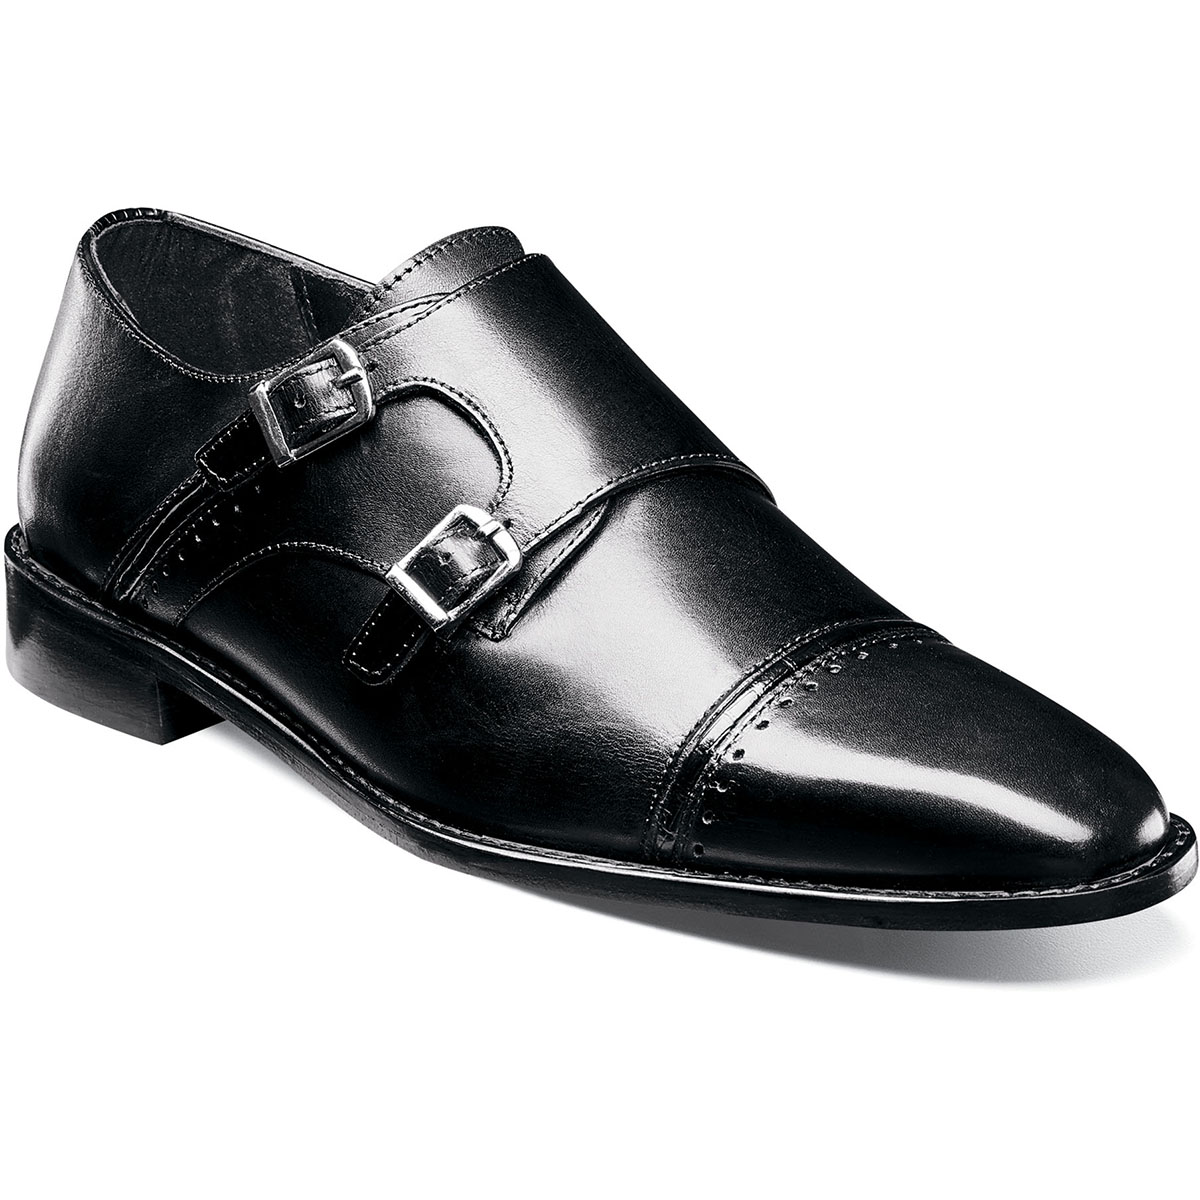 Men's Dress Shoes | Black Cap Toe Monk Strap | Stacy Adams Rycroft